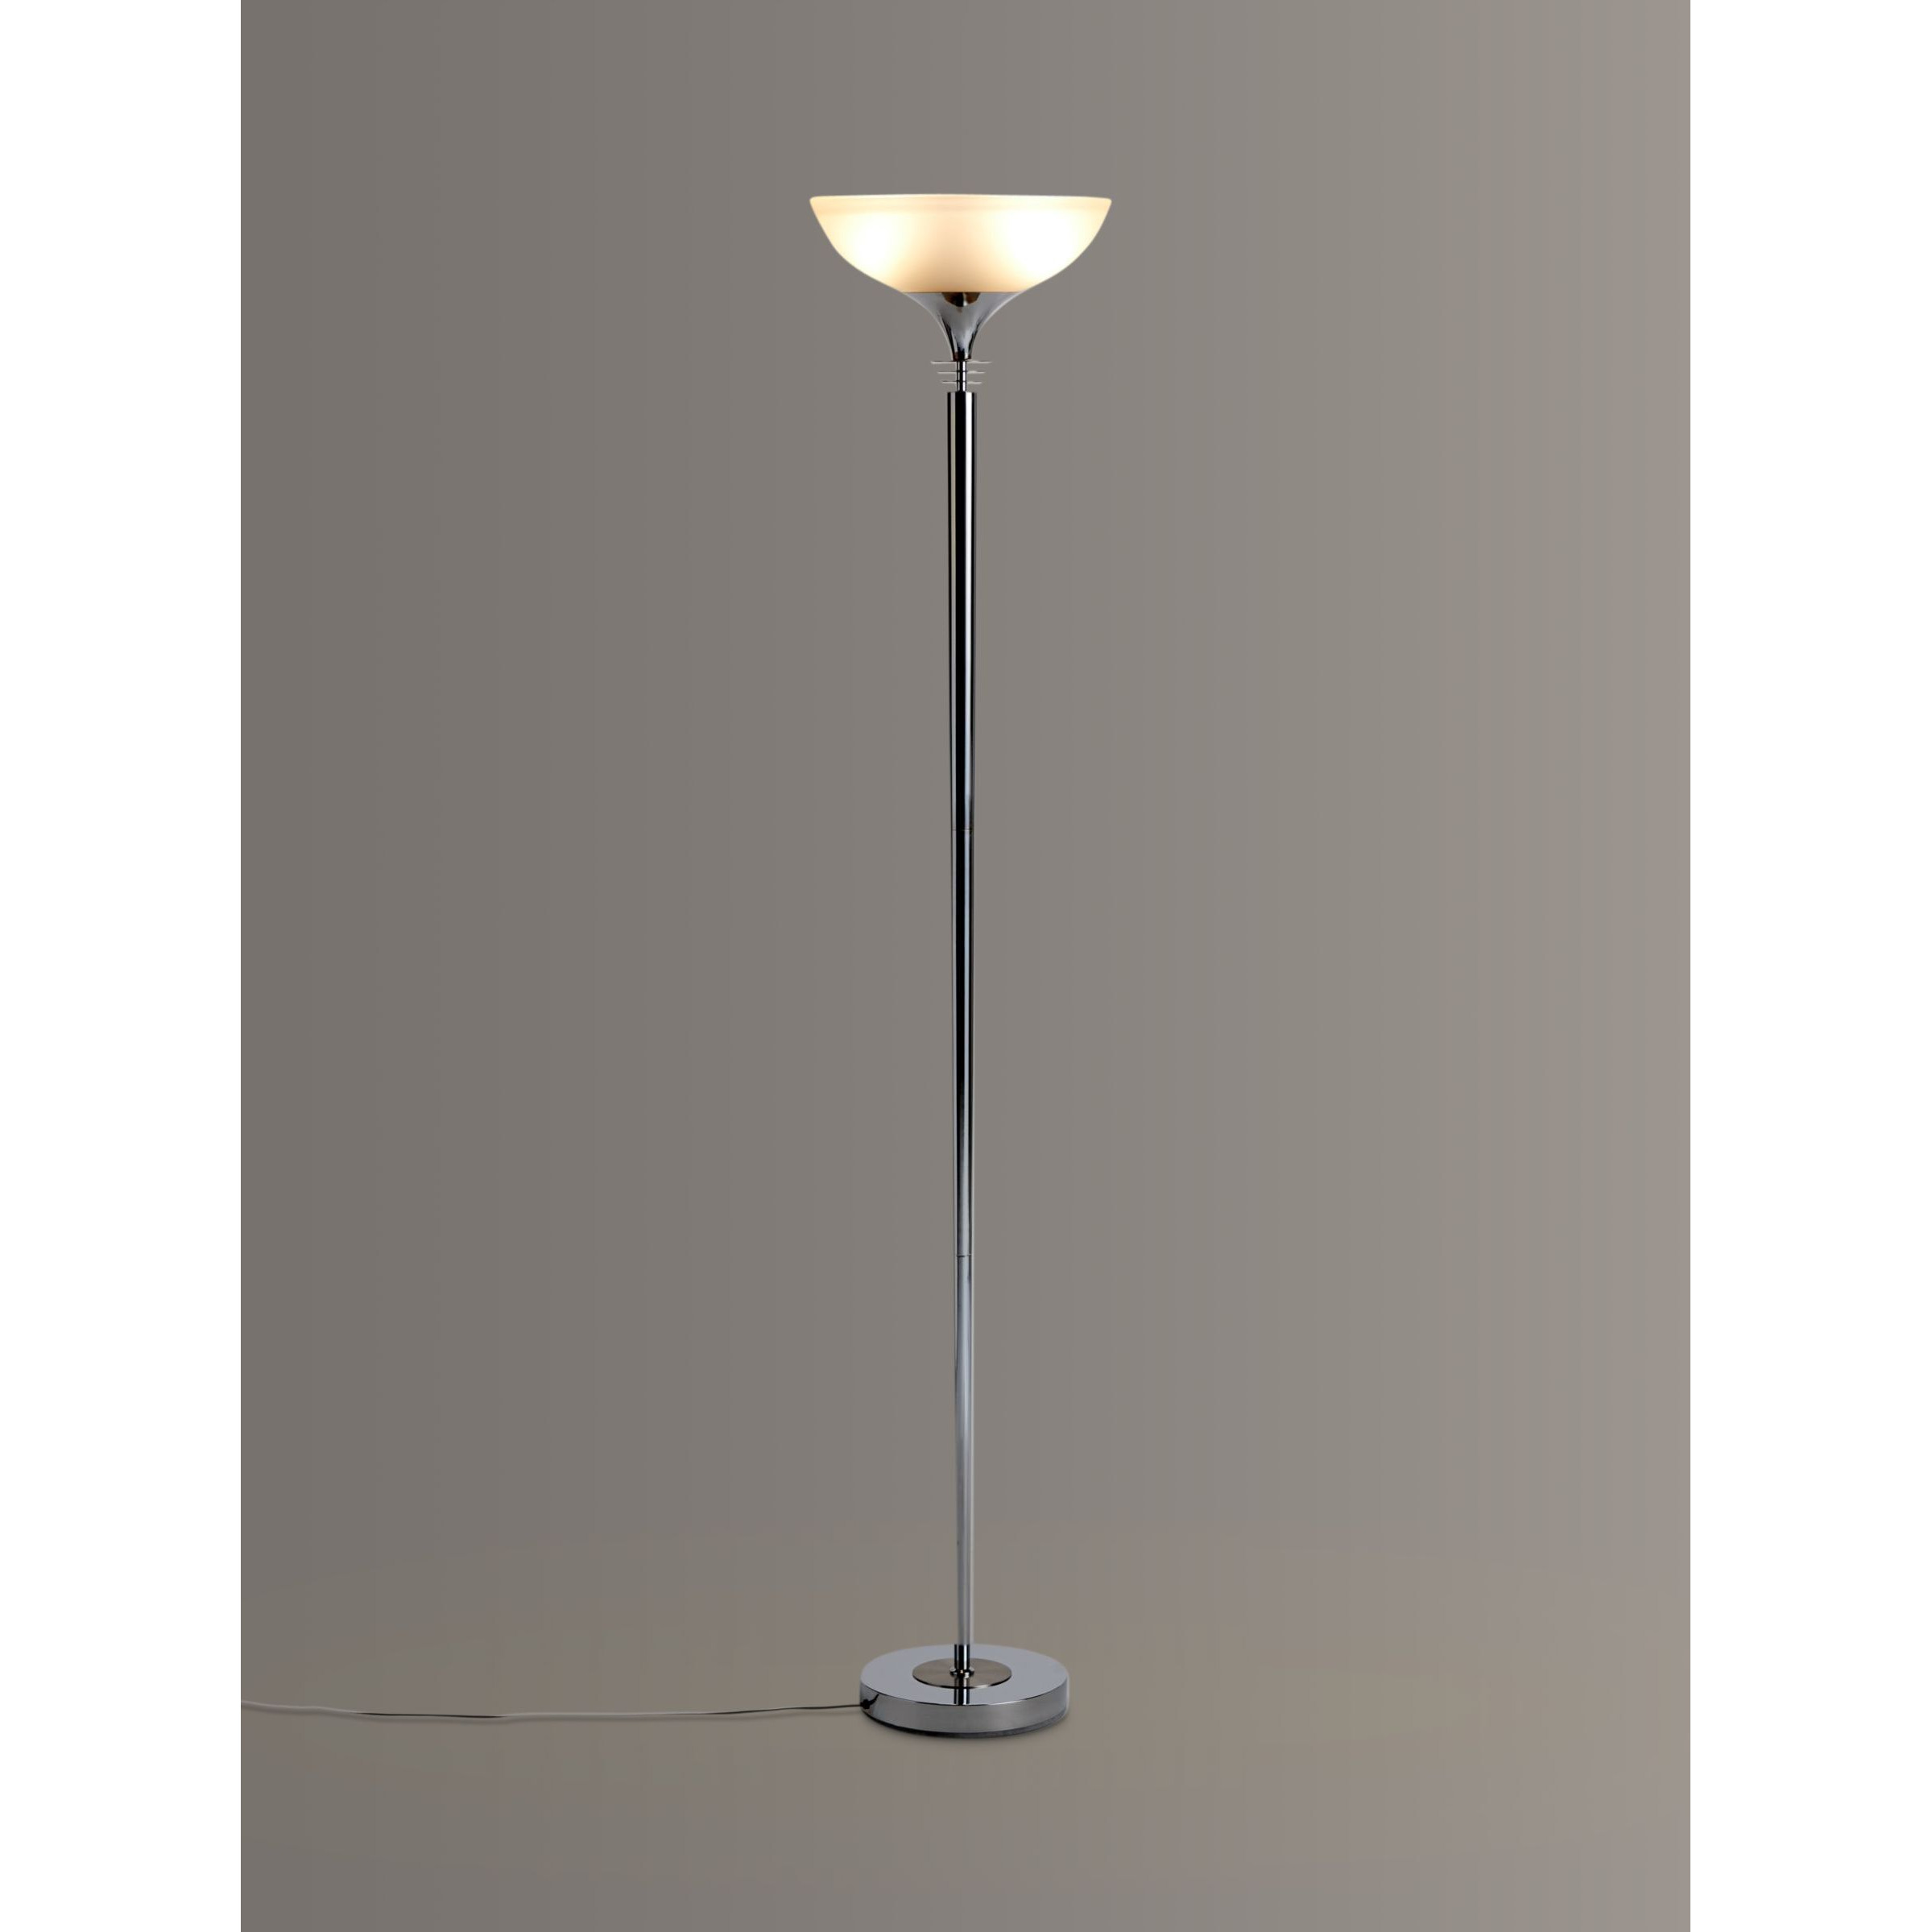 John Lewis Azure Uplighter Floor Lamp - image 1